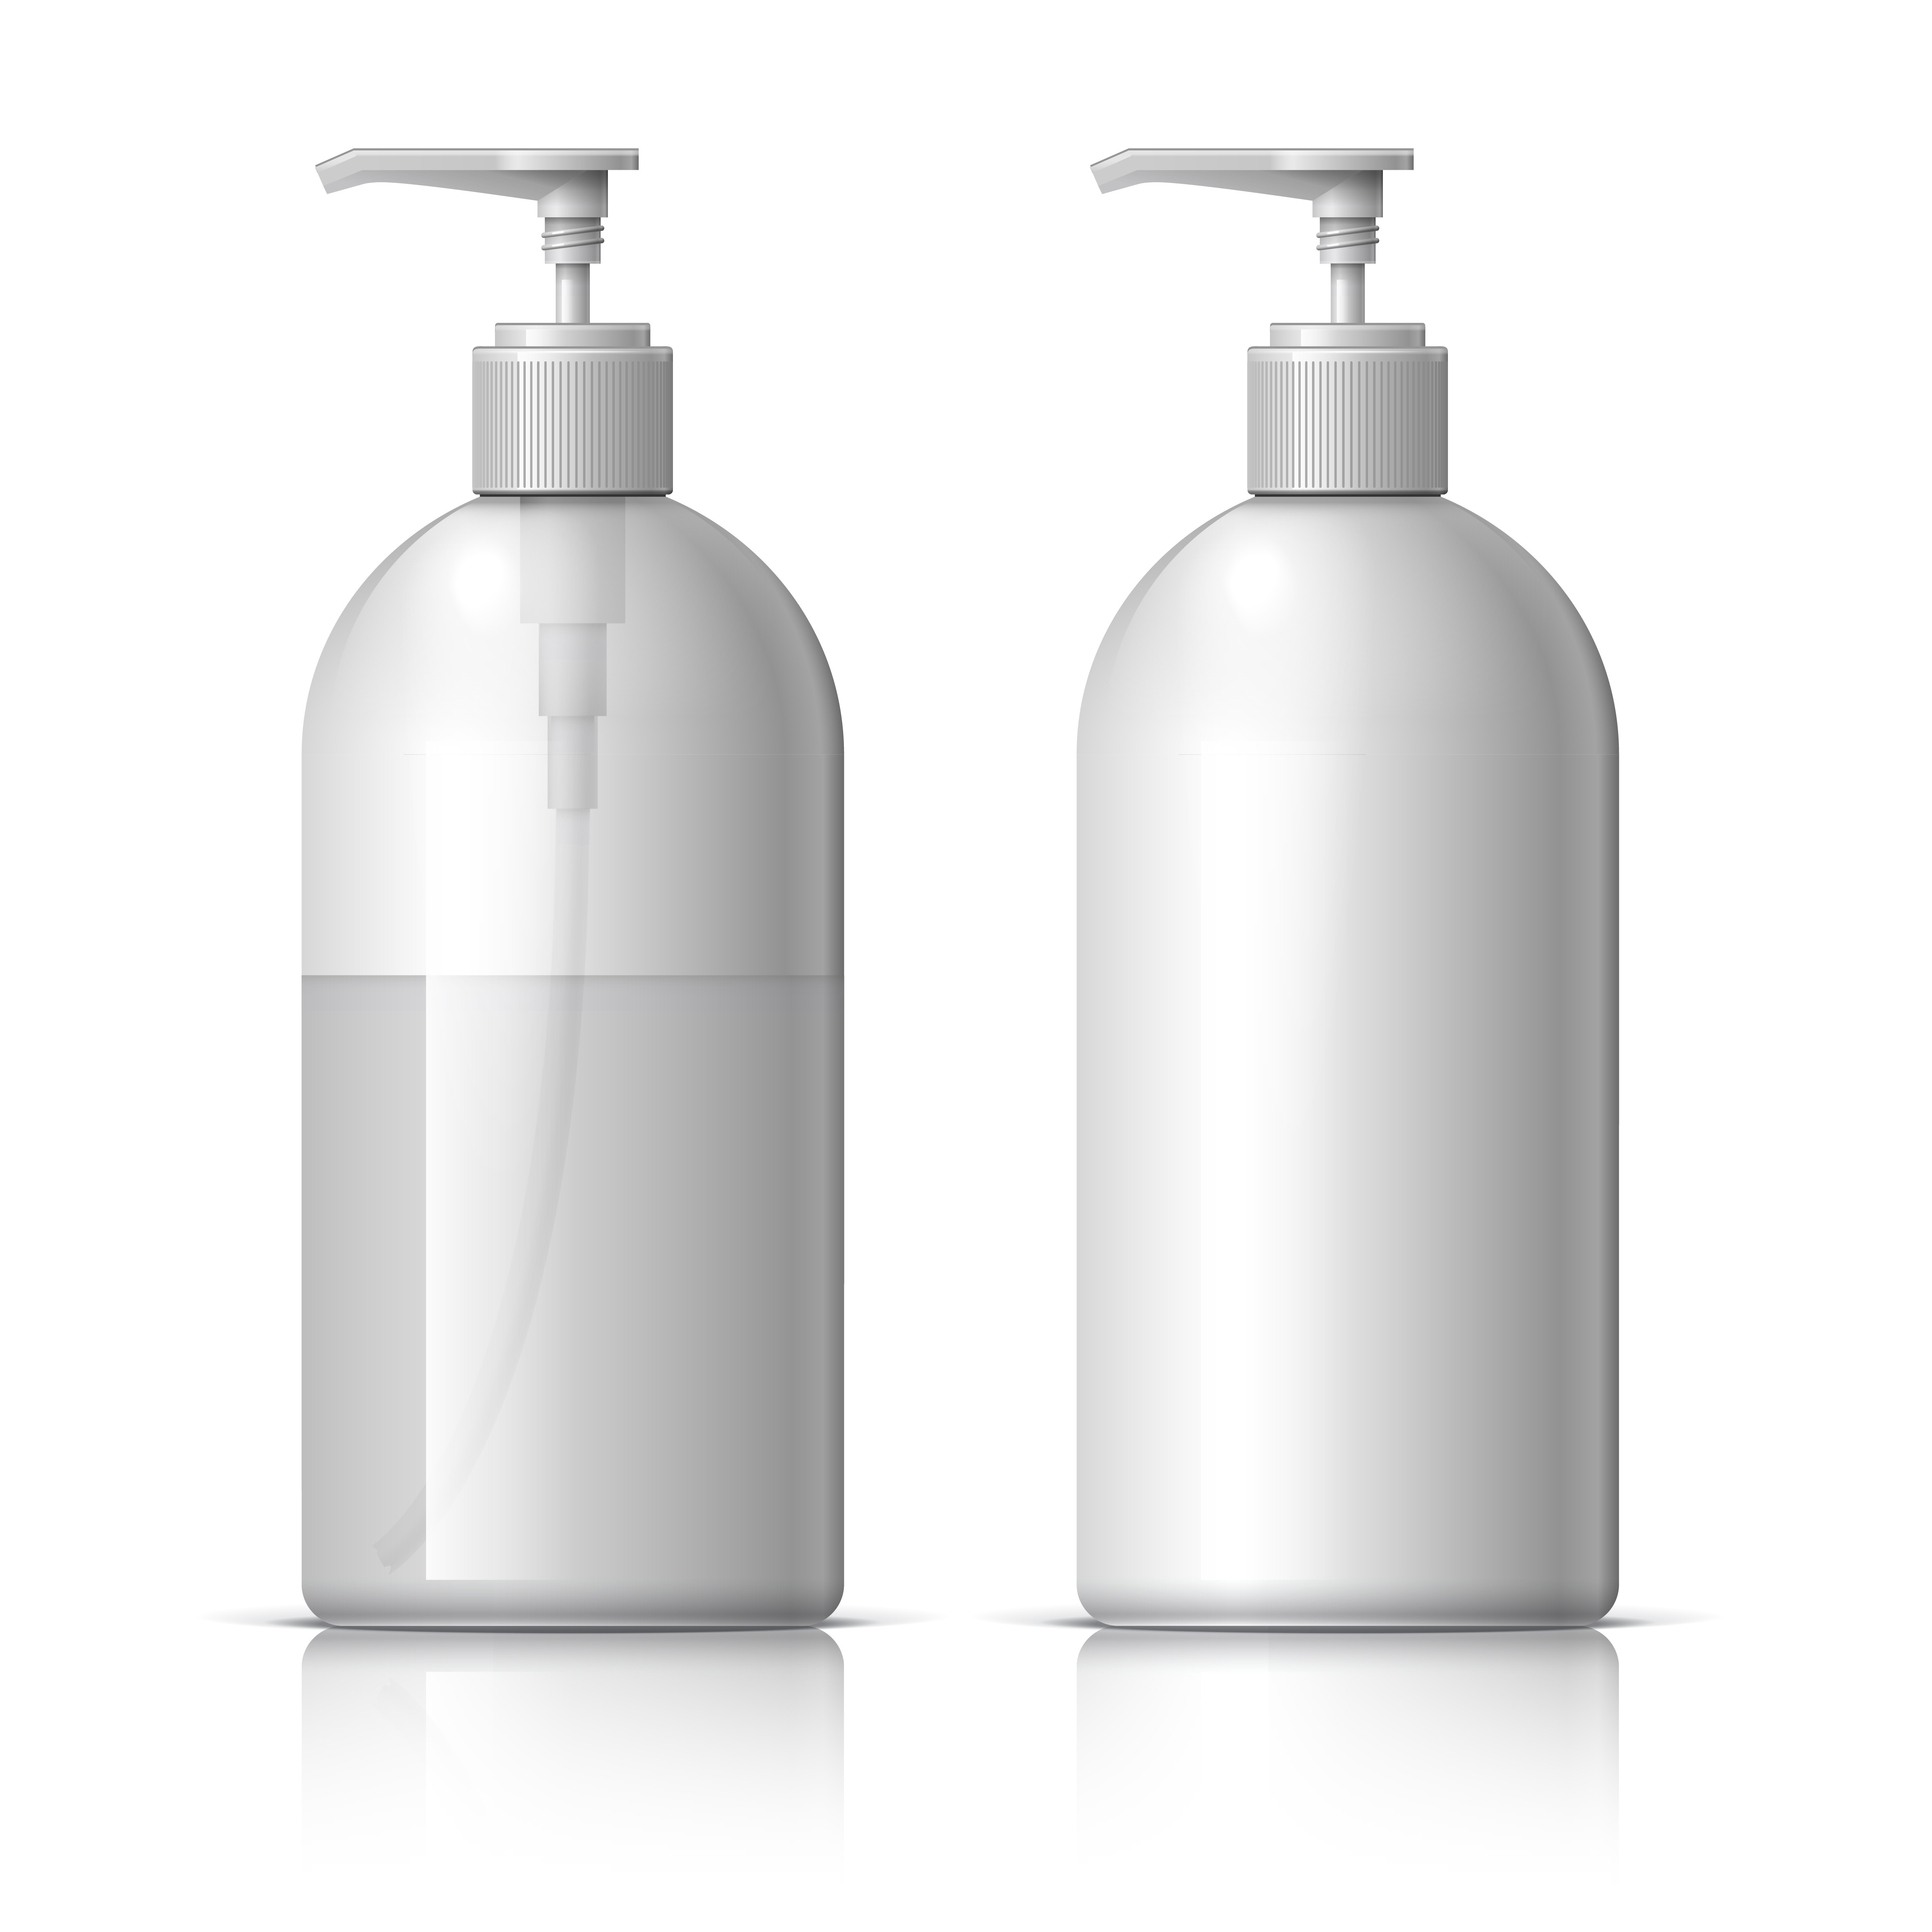 Bottles of Cosmetics Shampoo and Body wash mockup